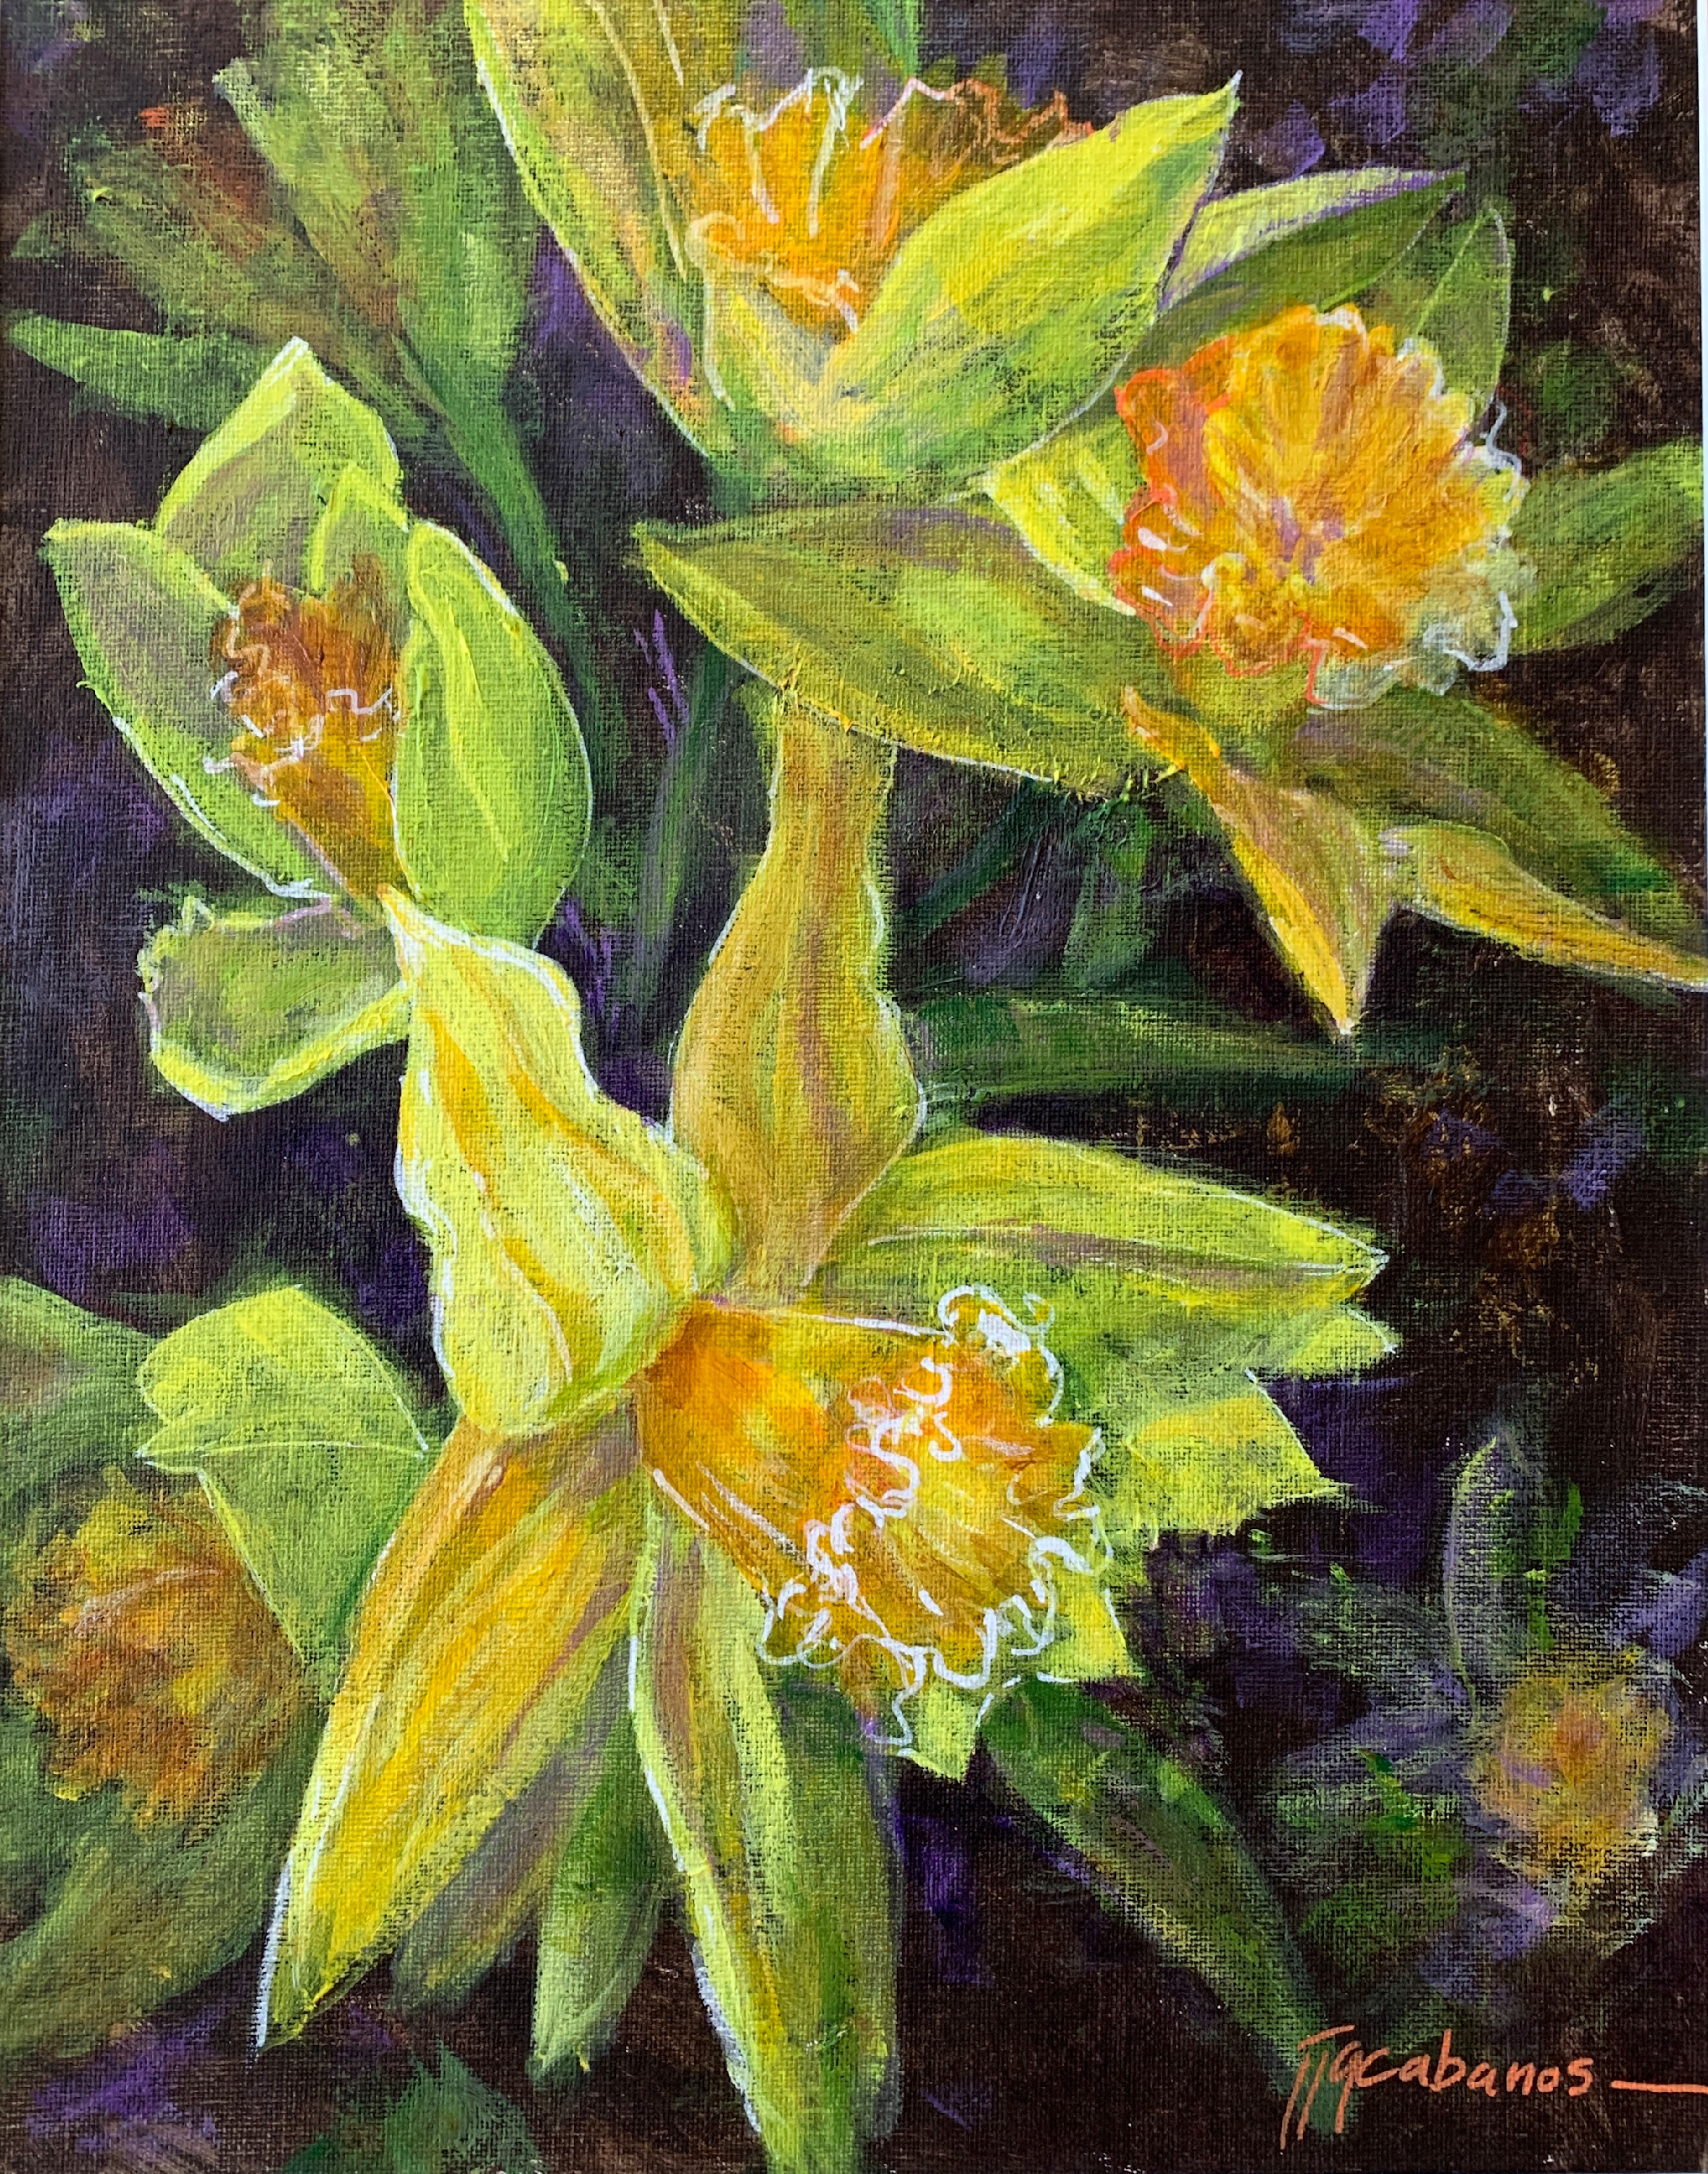 Daffodils as0rez